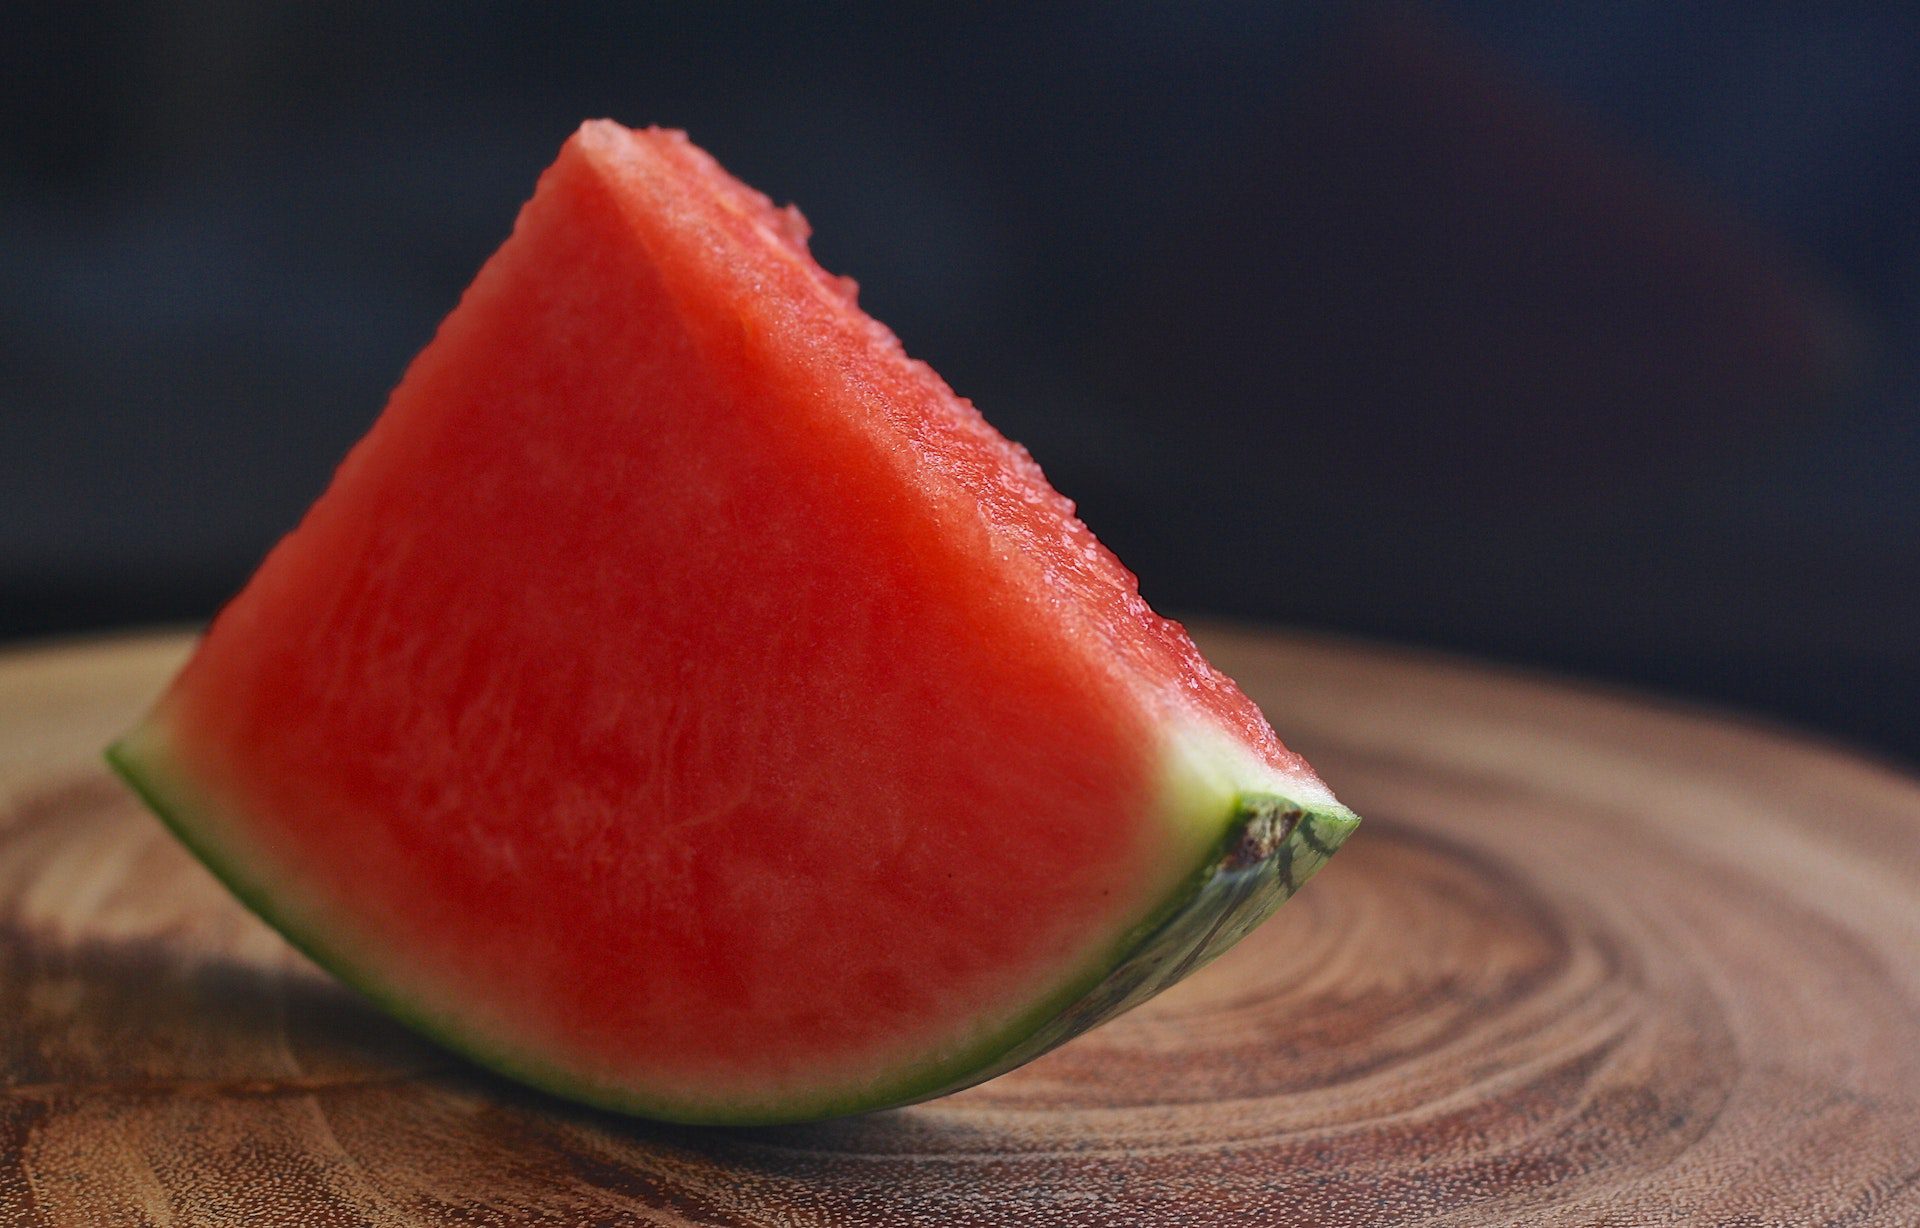 Can Shih Tzu eat watermelon